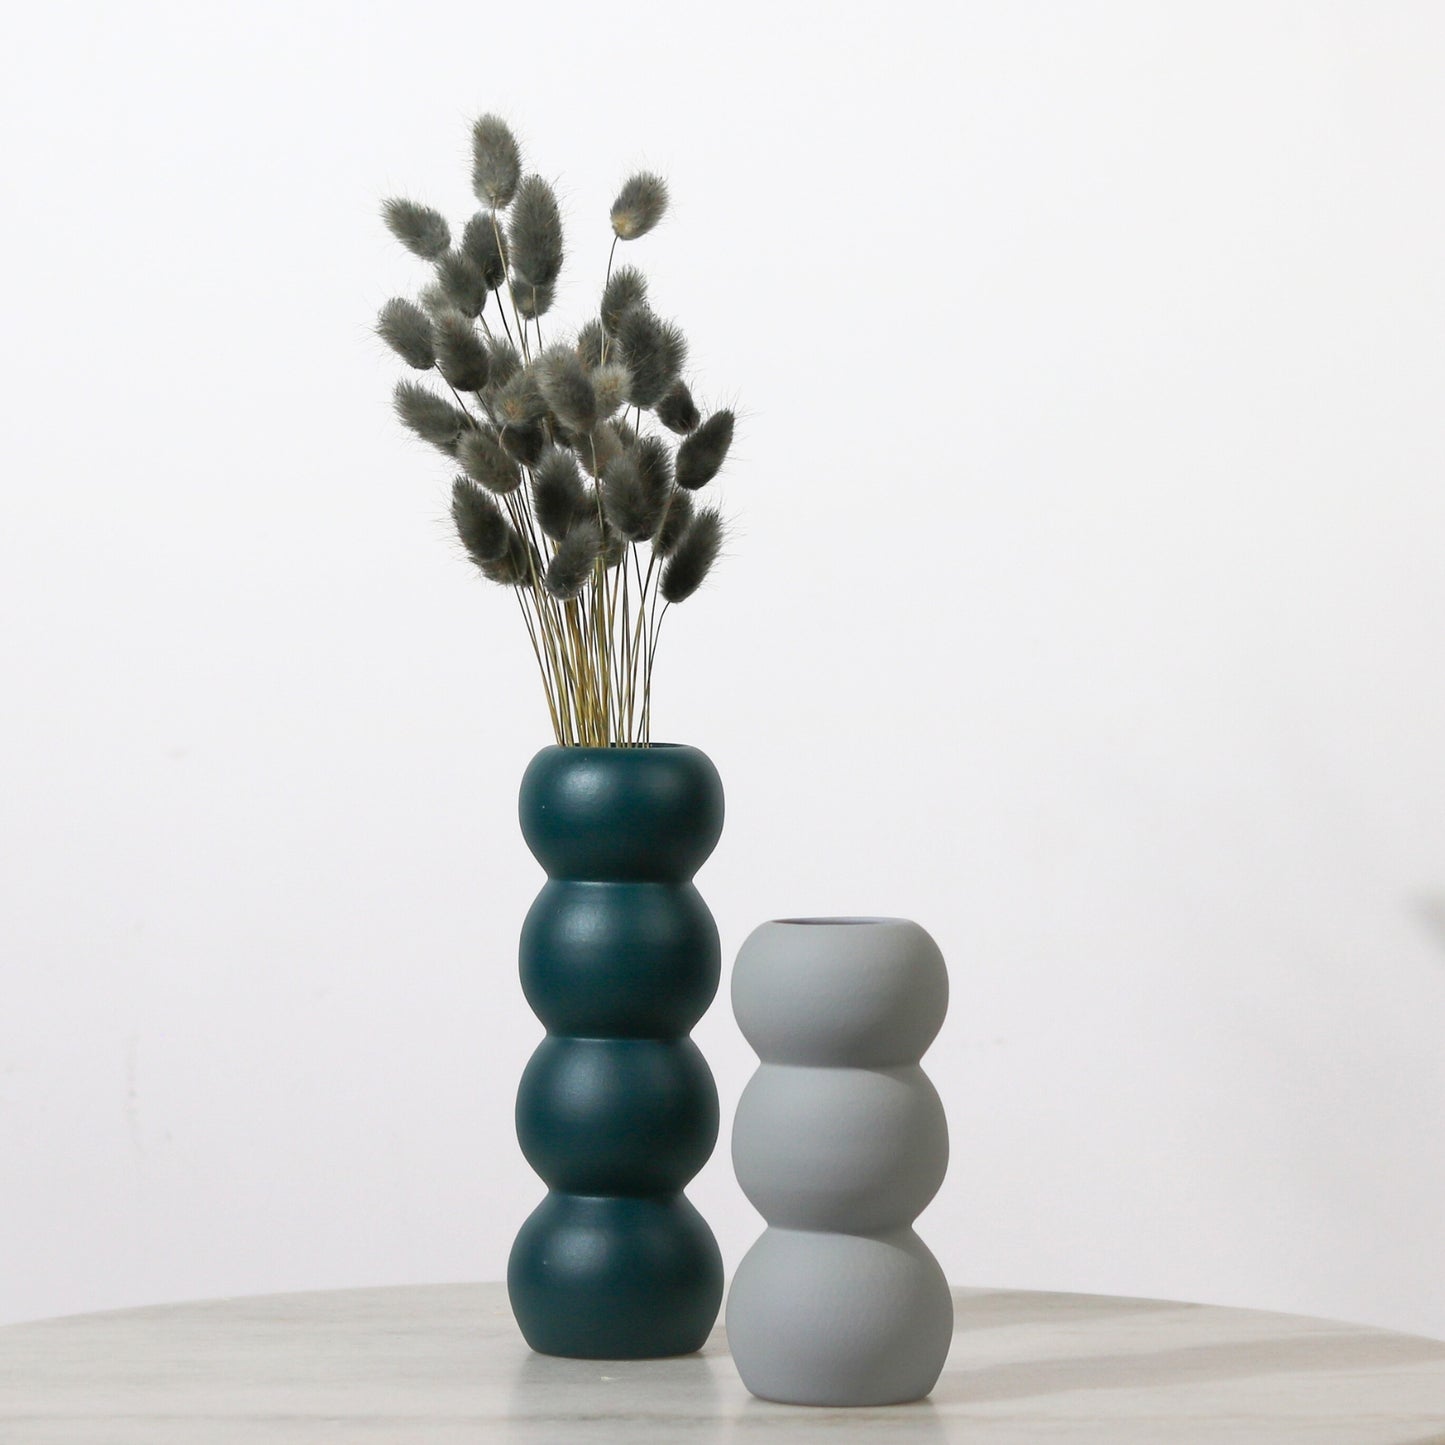 Customisable Orb Vases.